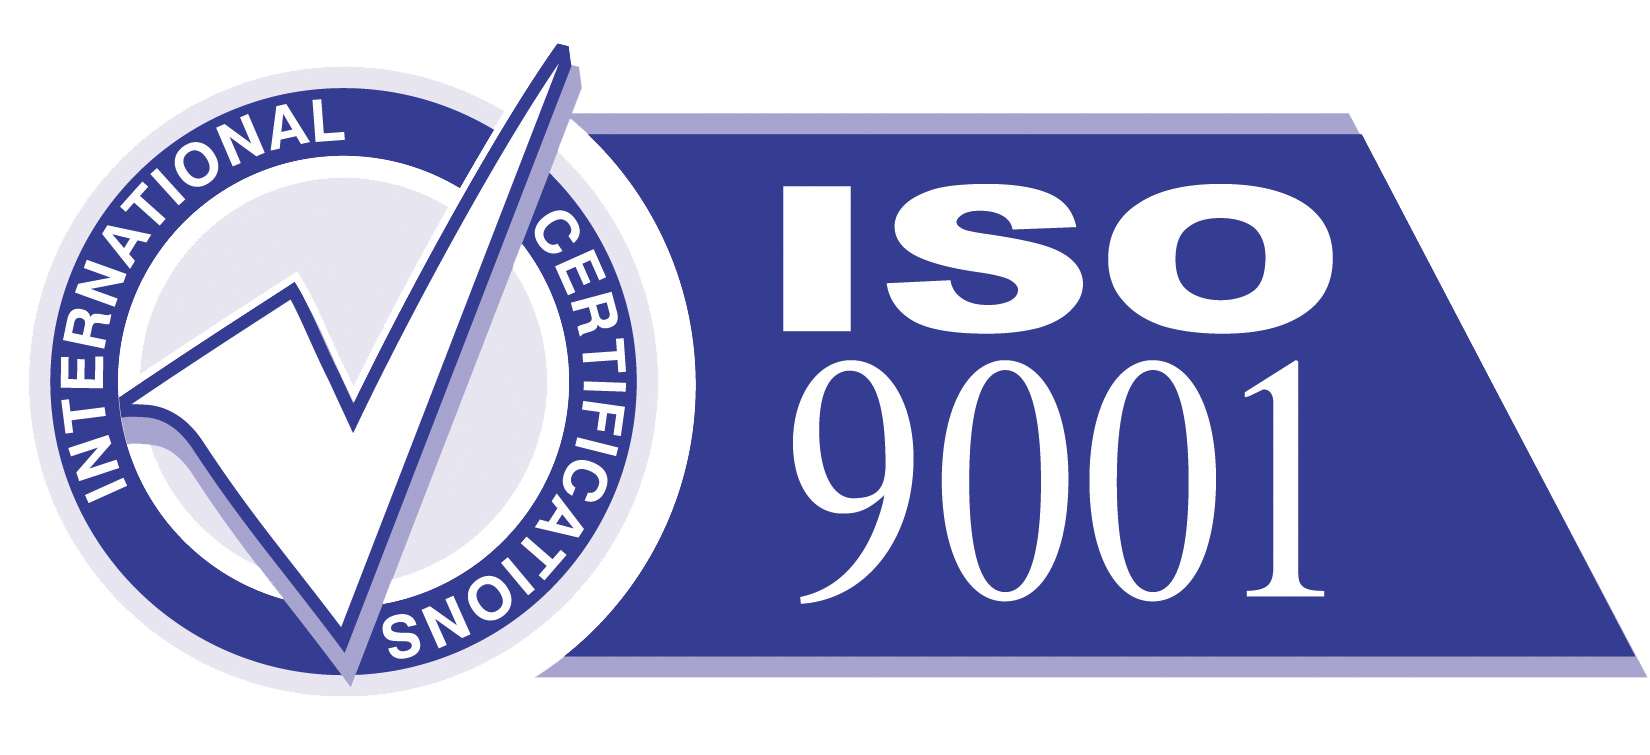 iso9001 logo